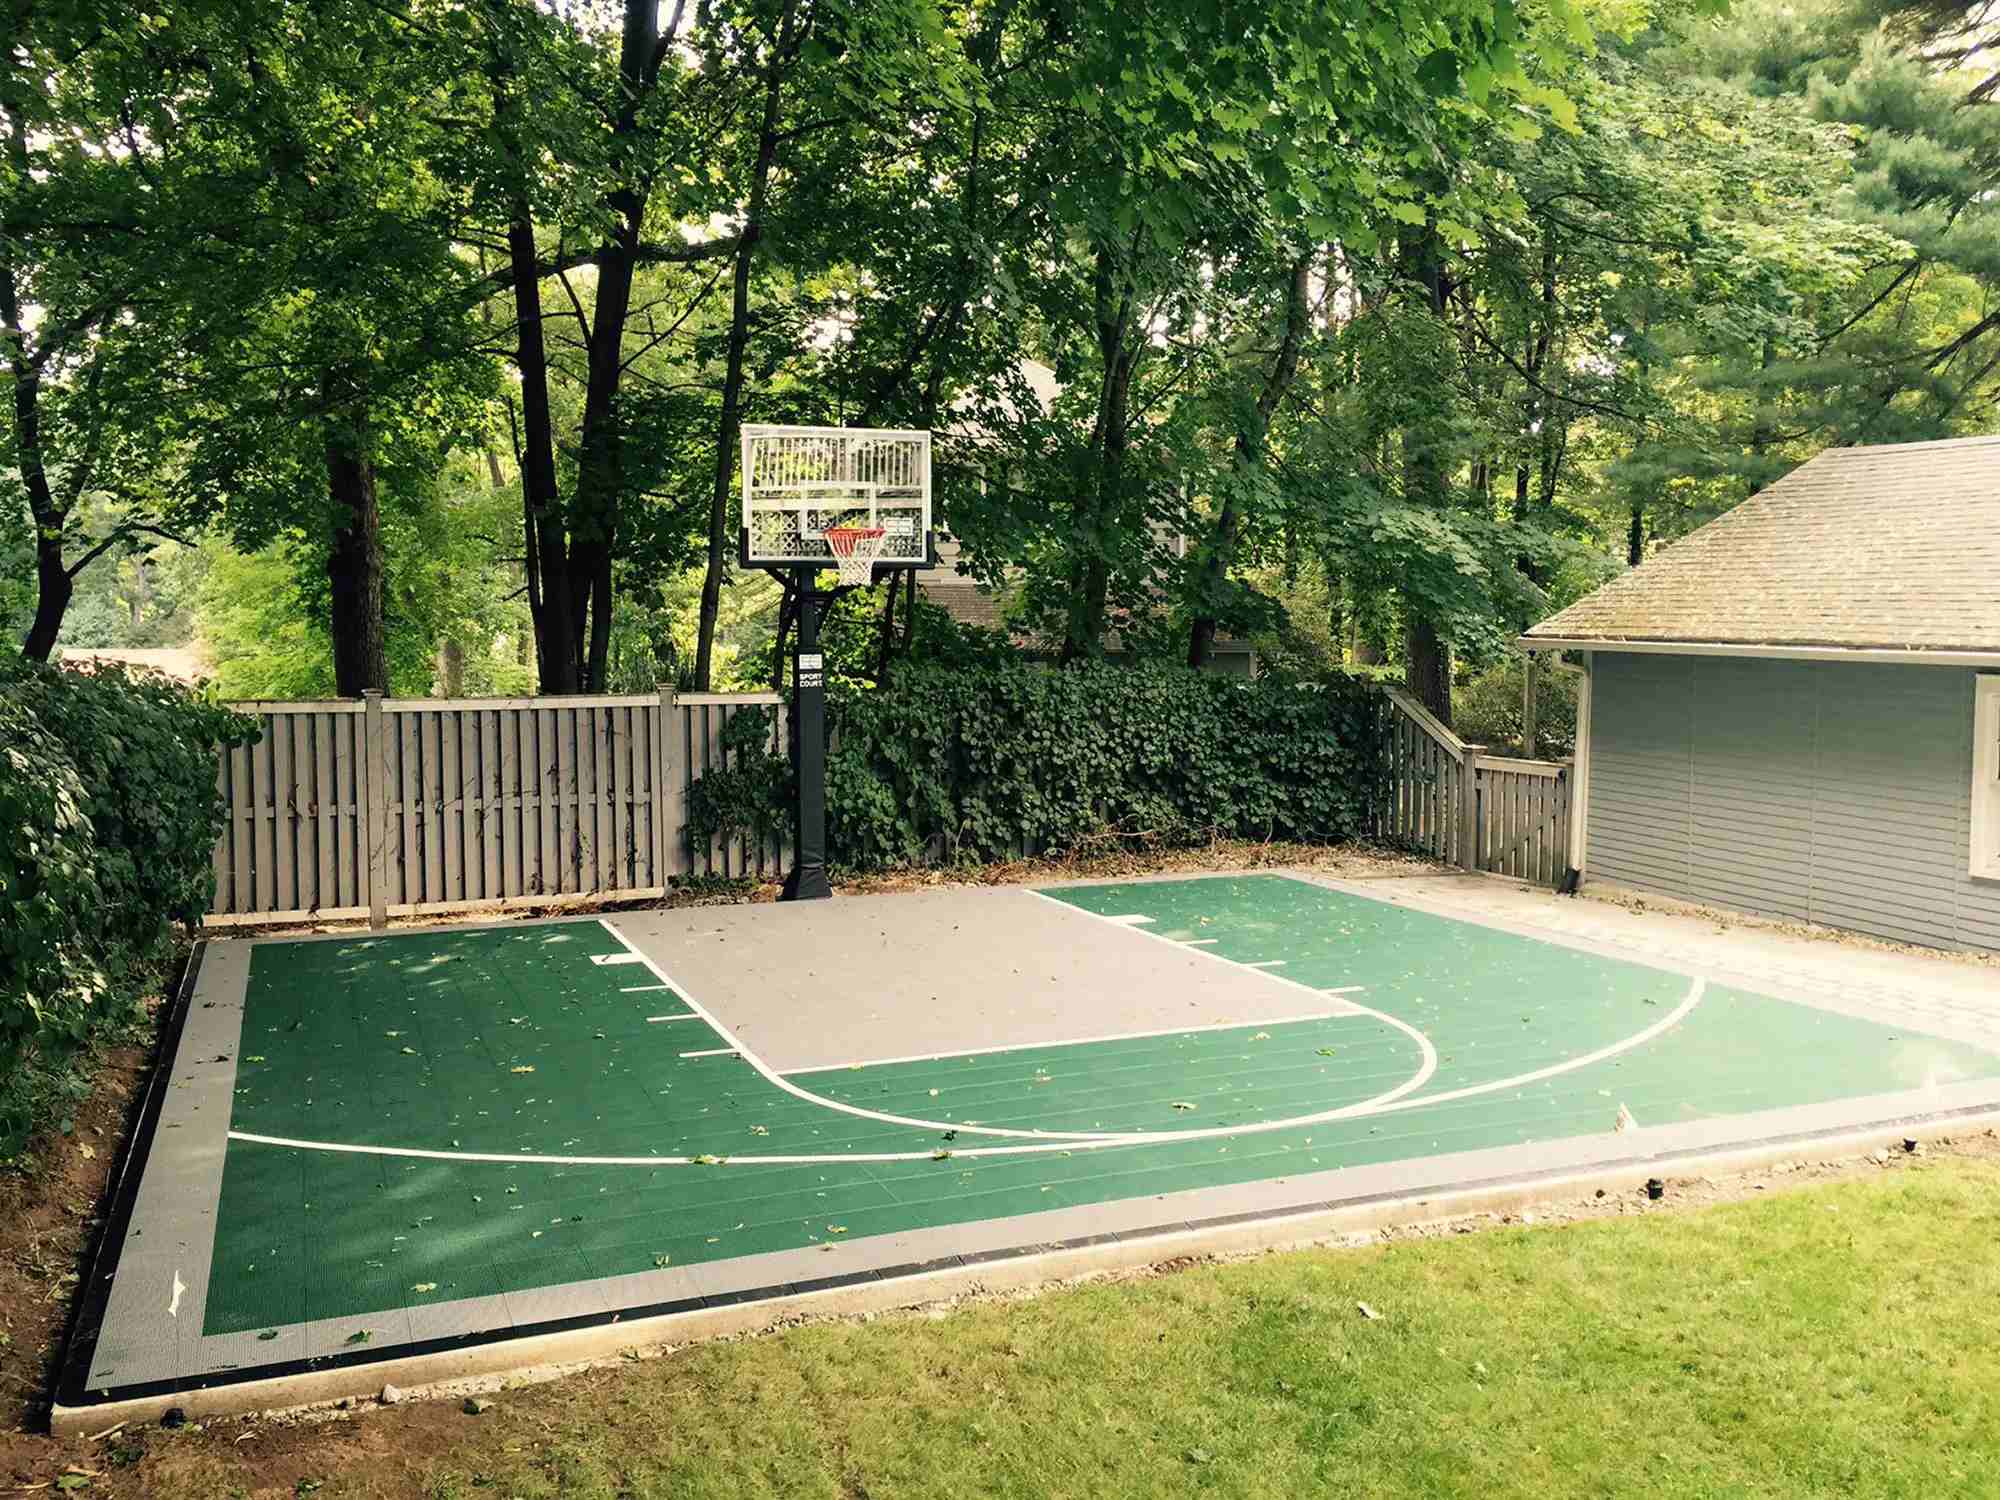 How To Make Basketball Court In Backyard Chicago Land Gardening